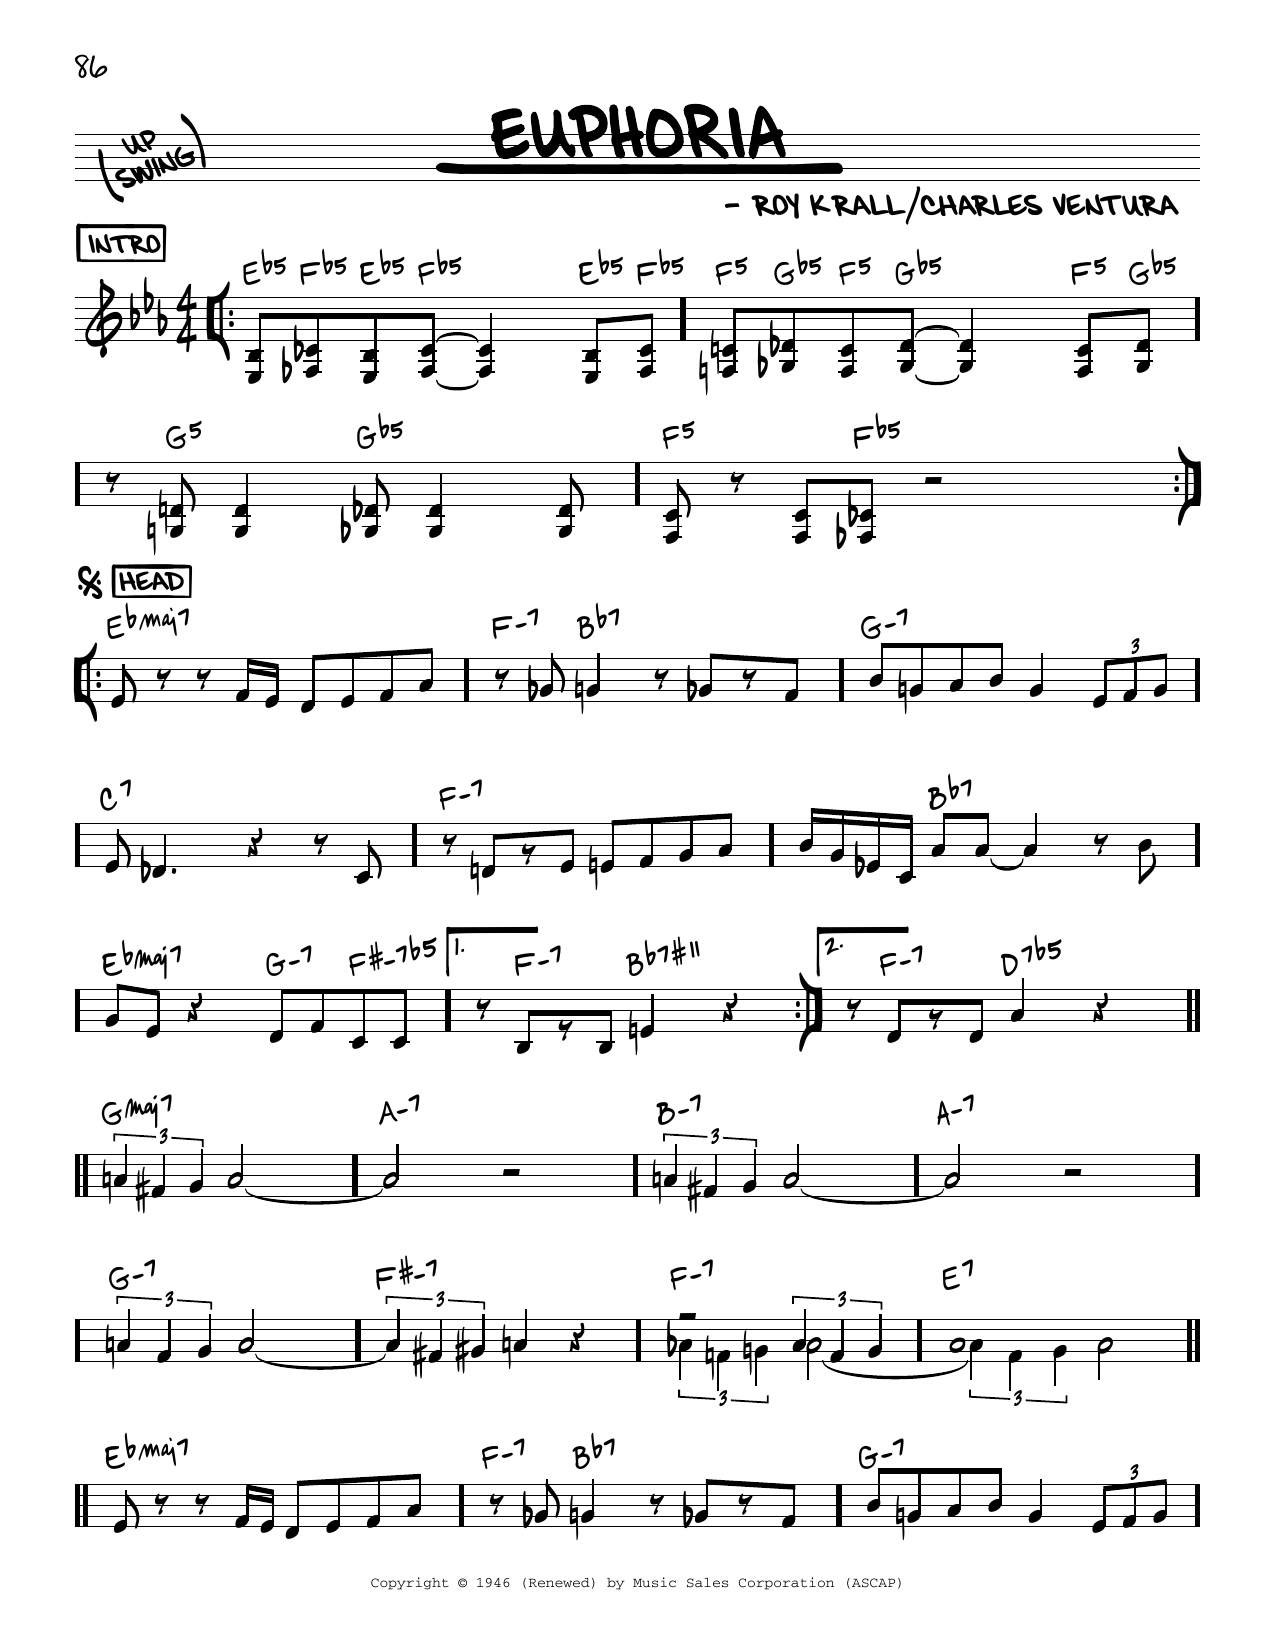 Charles Ventura Euphoria Sheet Music Notes & Chords for Real Book – Melody & Chords - Download or Print PDF